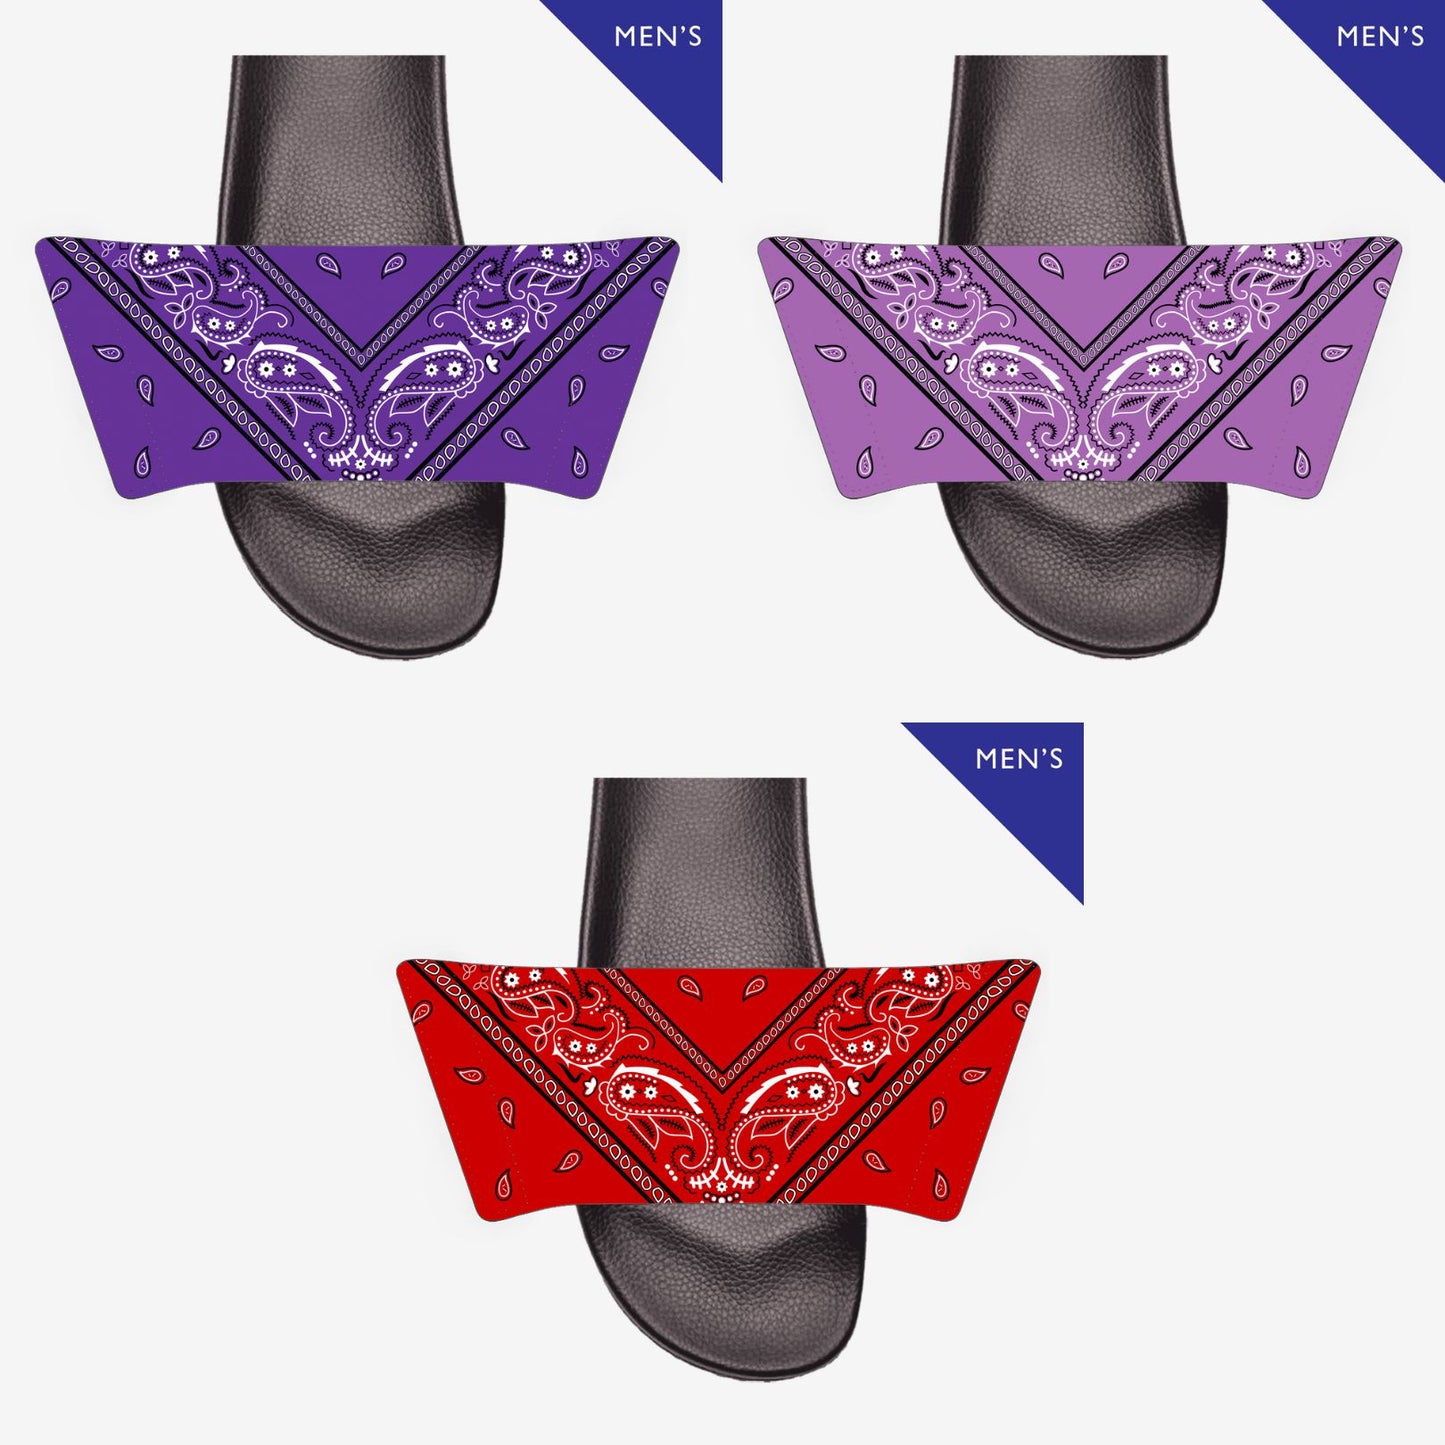 Add On Strap for Men's Slides - Bandana Designs (Choose Purple, Orchid, Red)